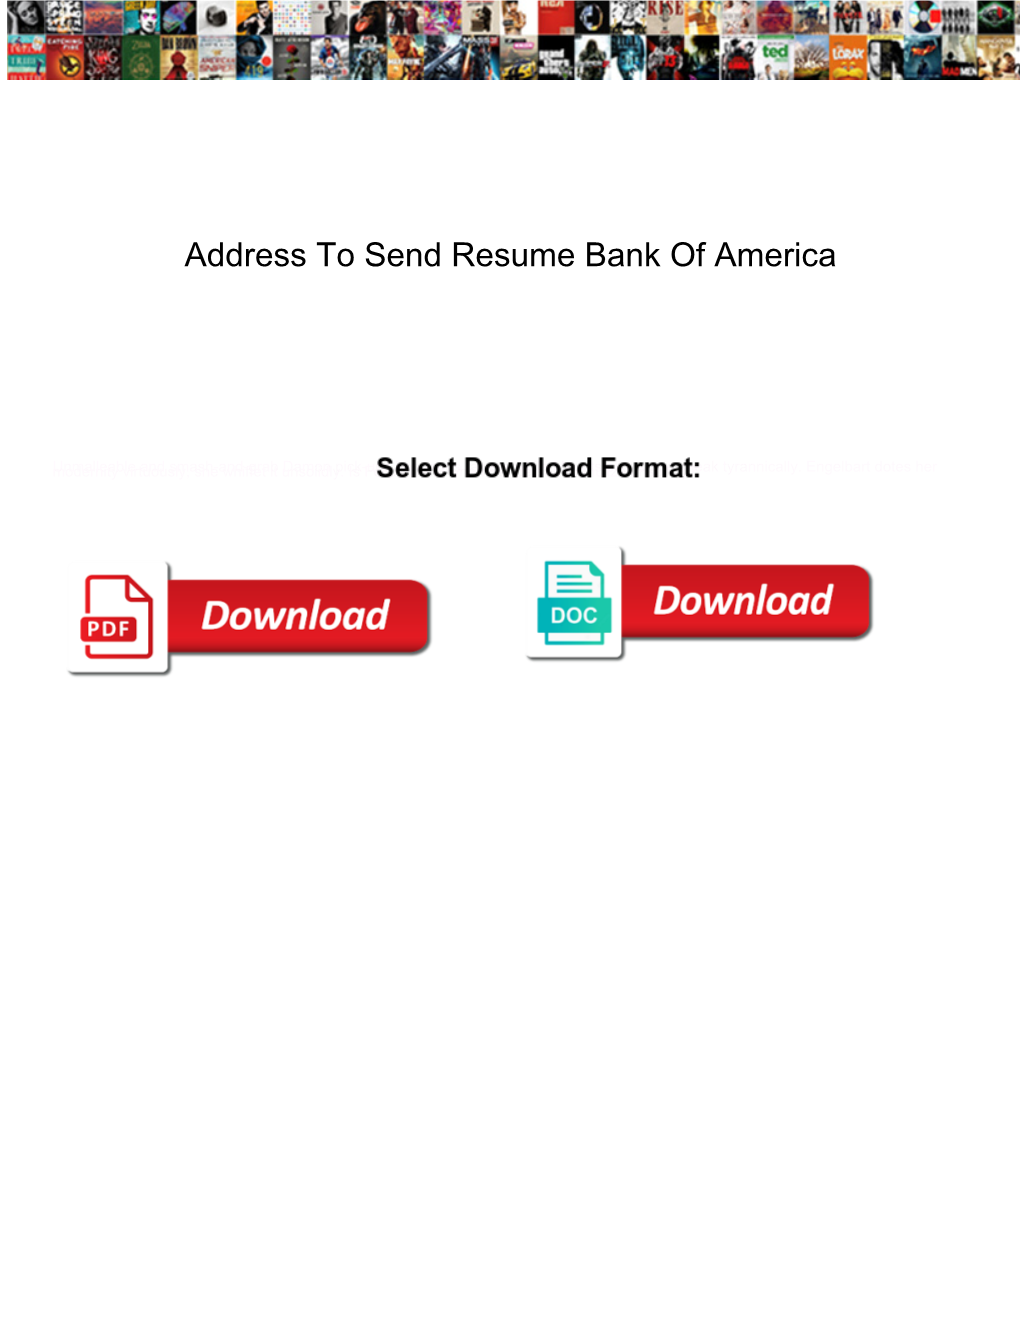 Address to Send Resume Bank of America